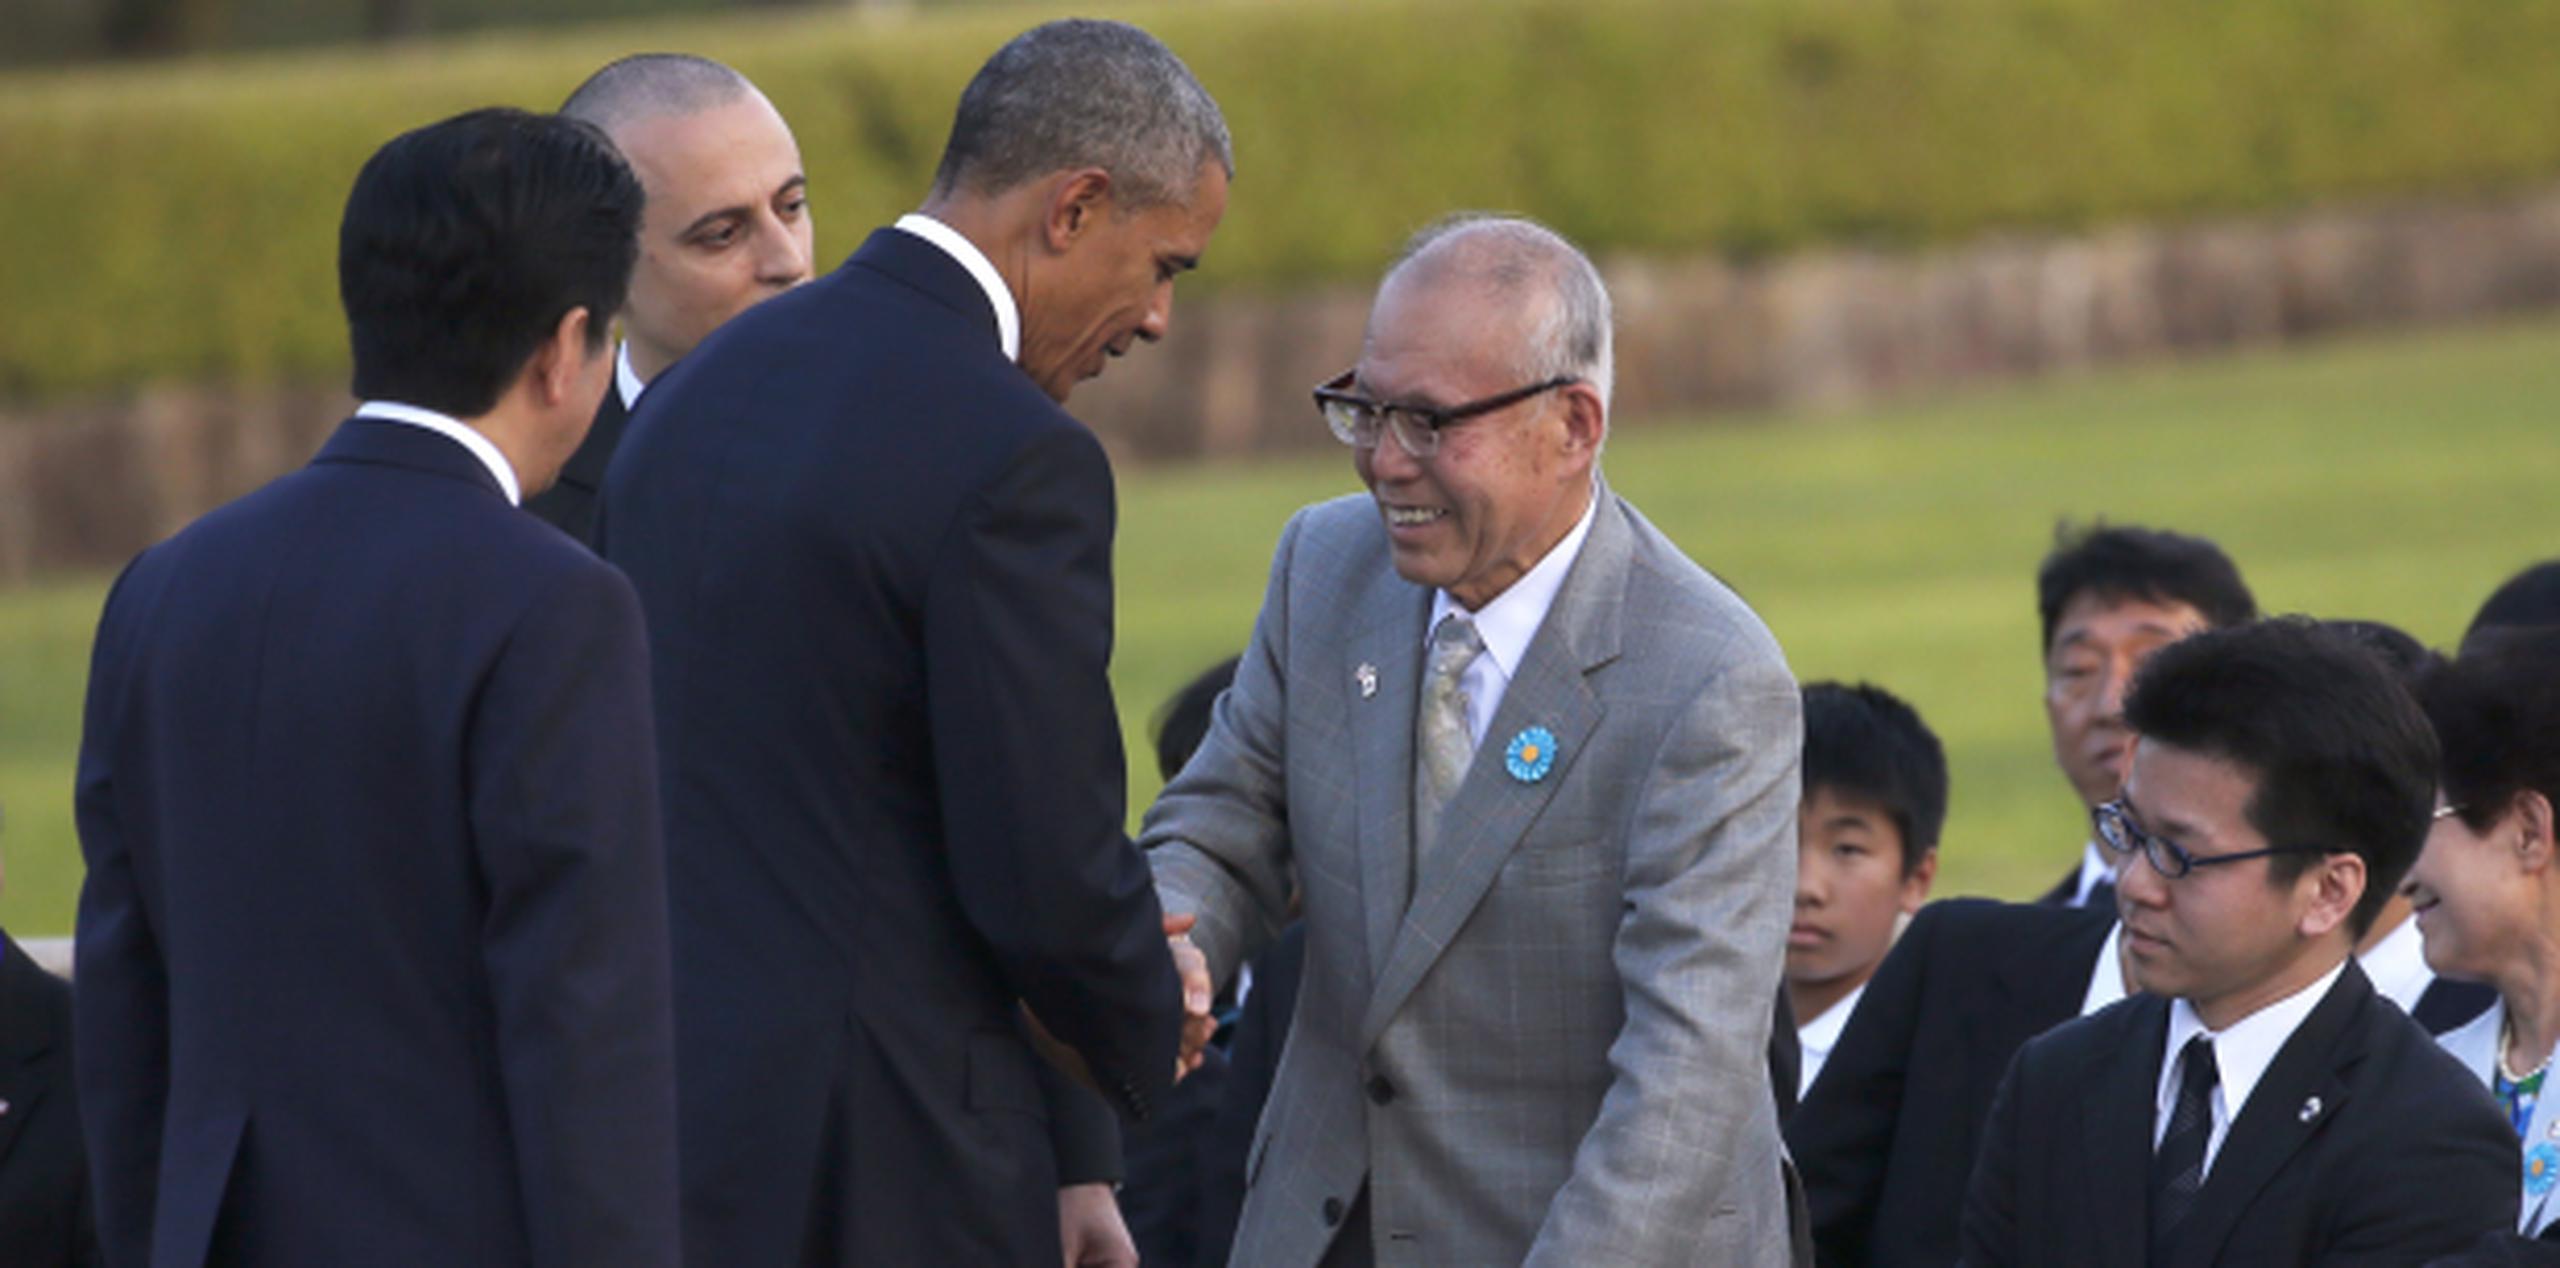 Obama saluda a Shigeaki Mori, sobreviviente de la bomba atómica en Hiroshima. (Prensa Asociada)